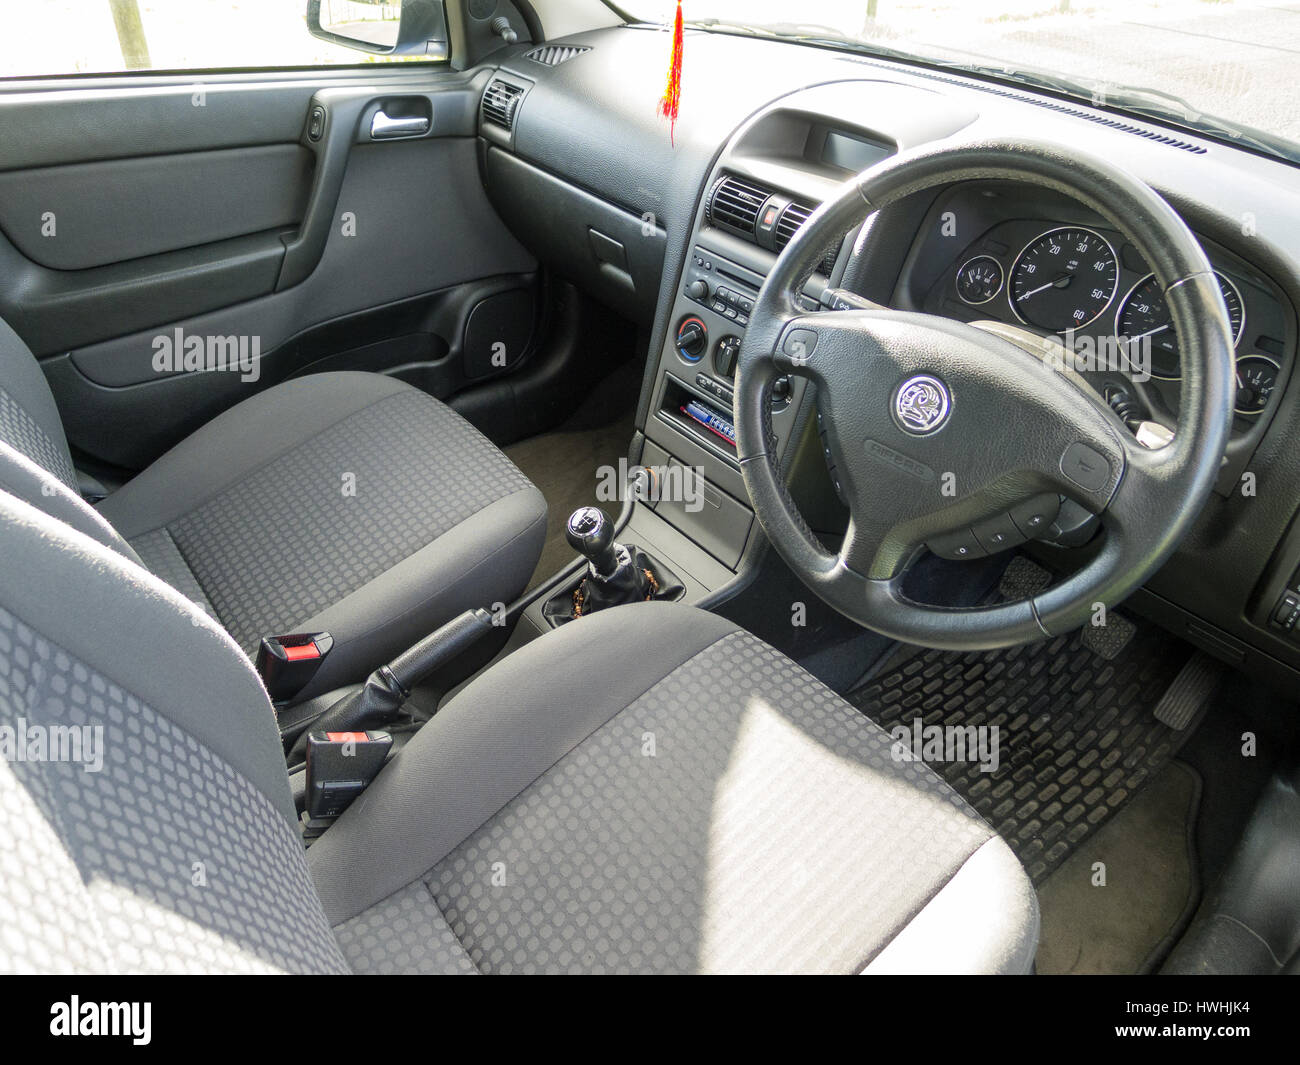 Interior of 2004 Vauxhall Astra G Stock Photo - Alamy